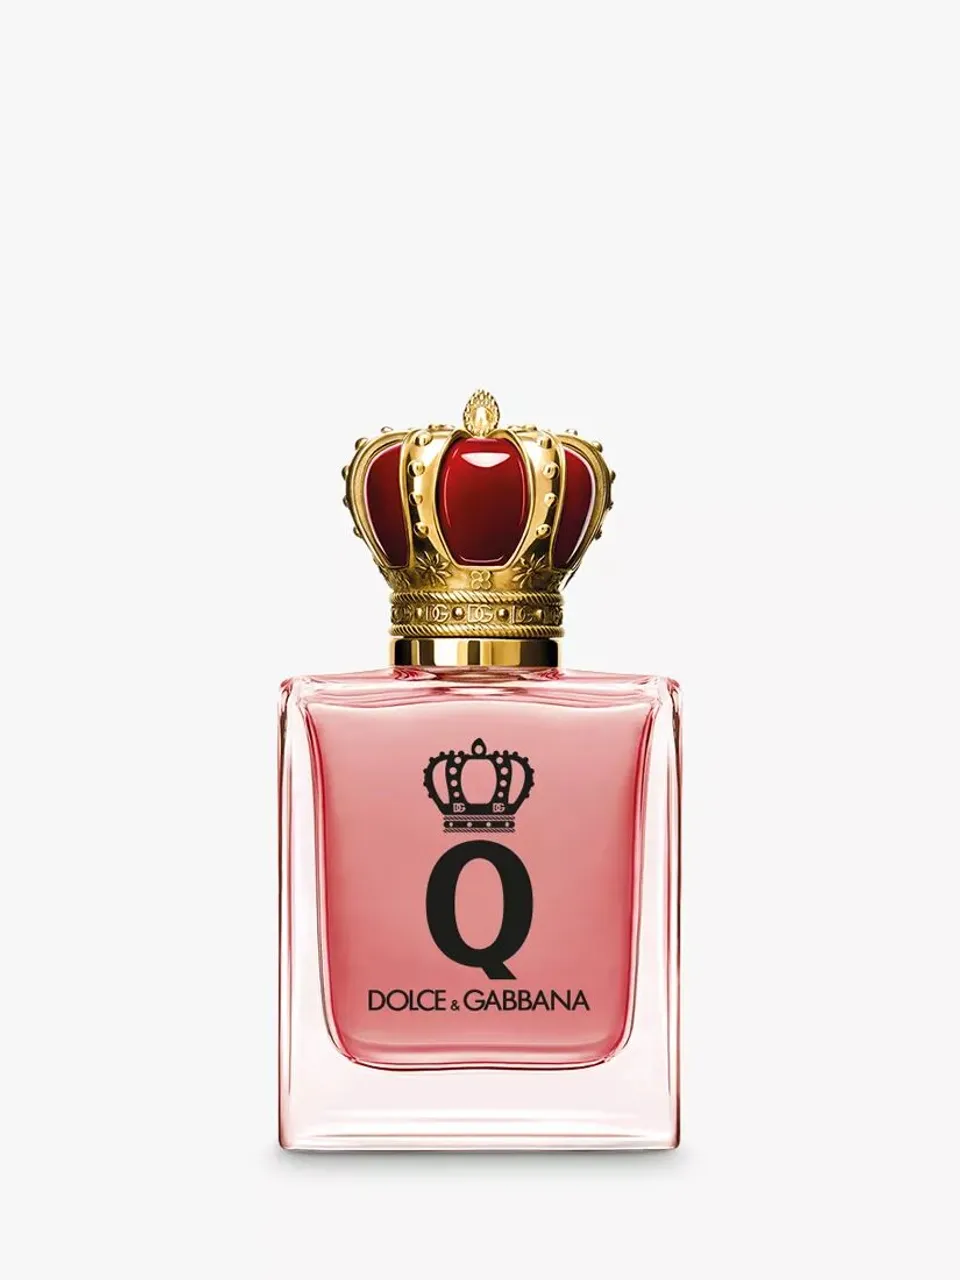 Q by Dolce & Gabbana Intense Eau de Parfum - Female - Size: 50ml